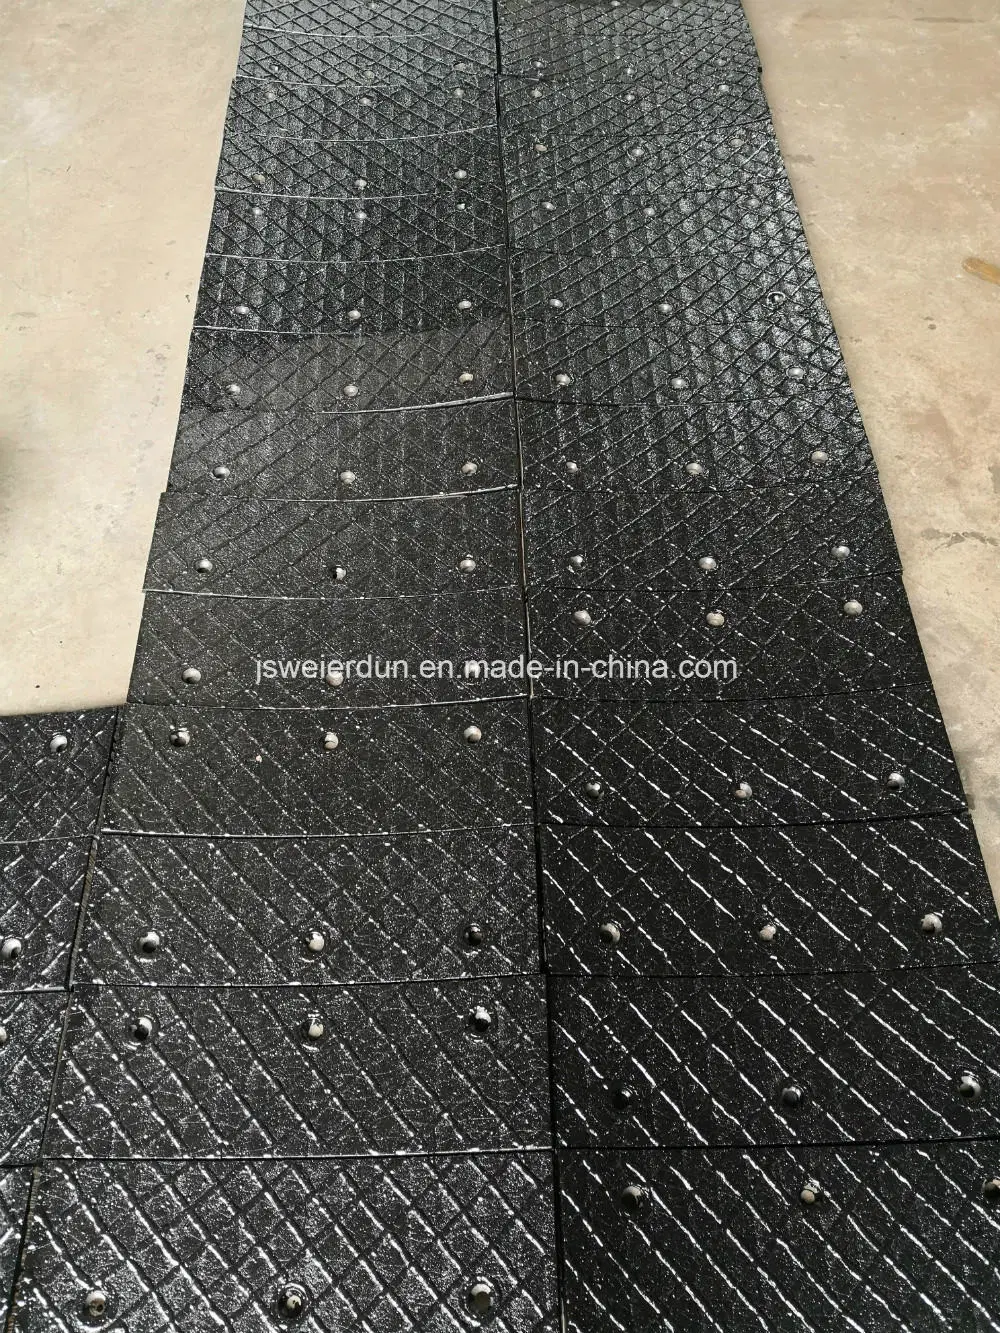 Super Abrasion Cco Resistant Steel Anti-Wear Plate